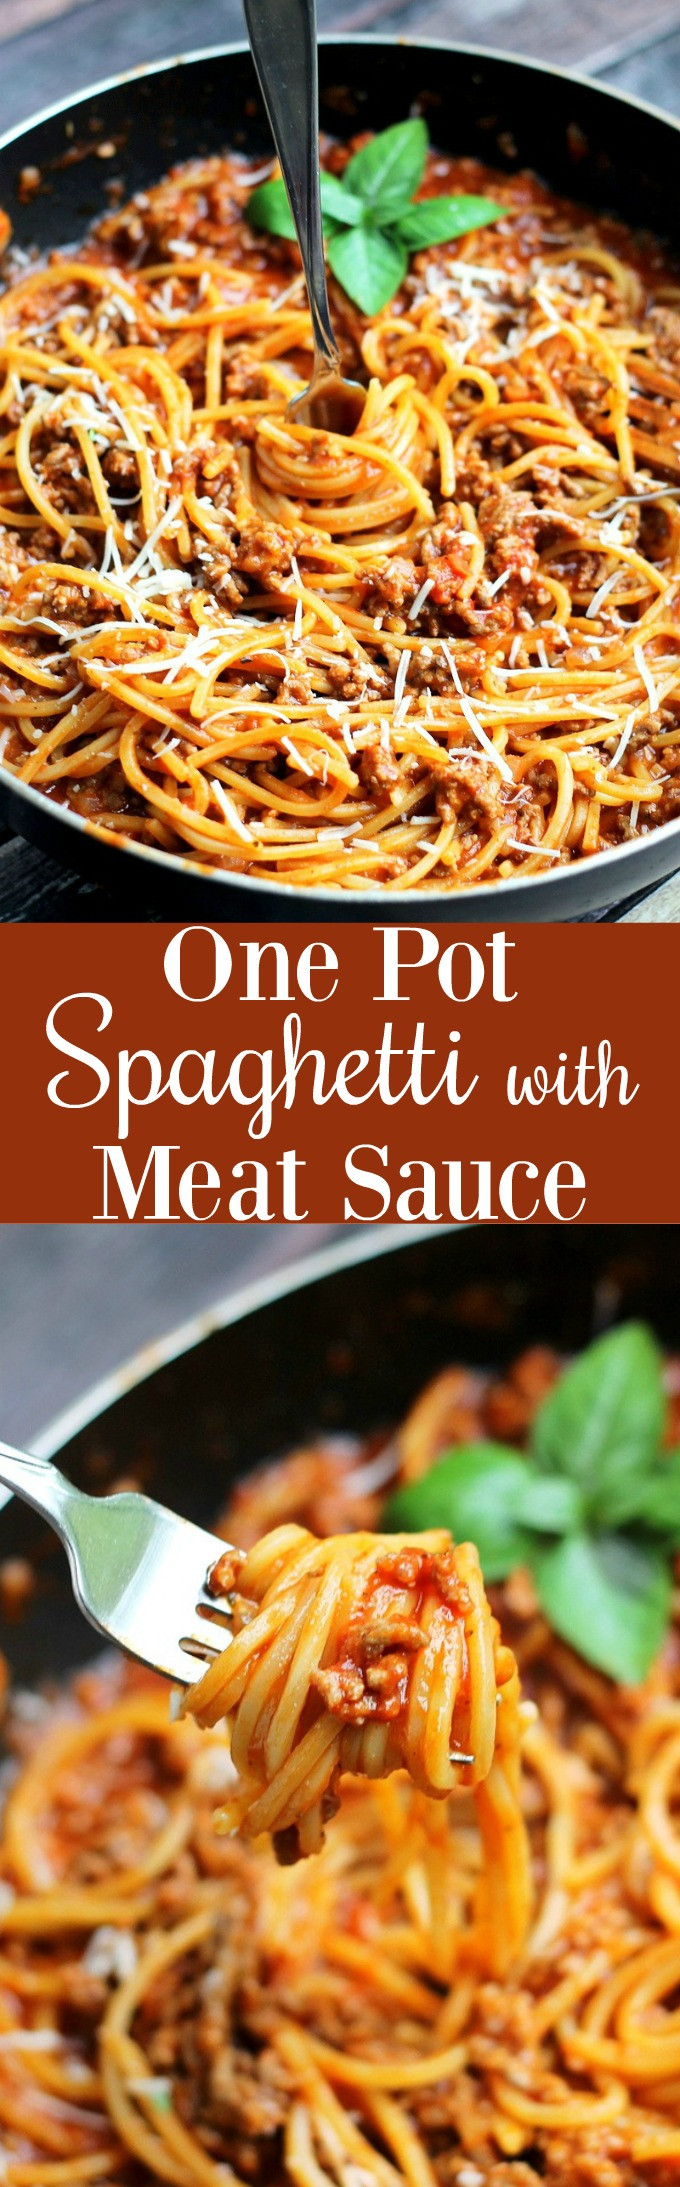 One Pot Spaghetti With Meat Sauce
 e Pot Spaghetti with Meat Sauce • Domestic Superhero